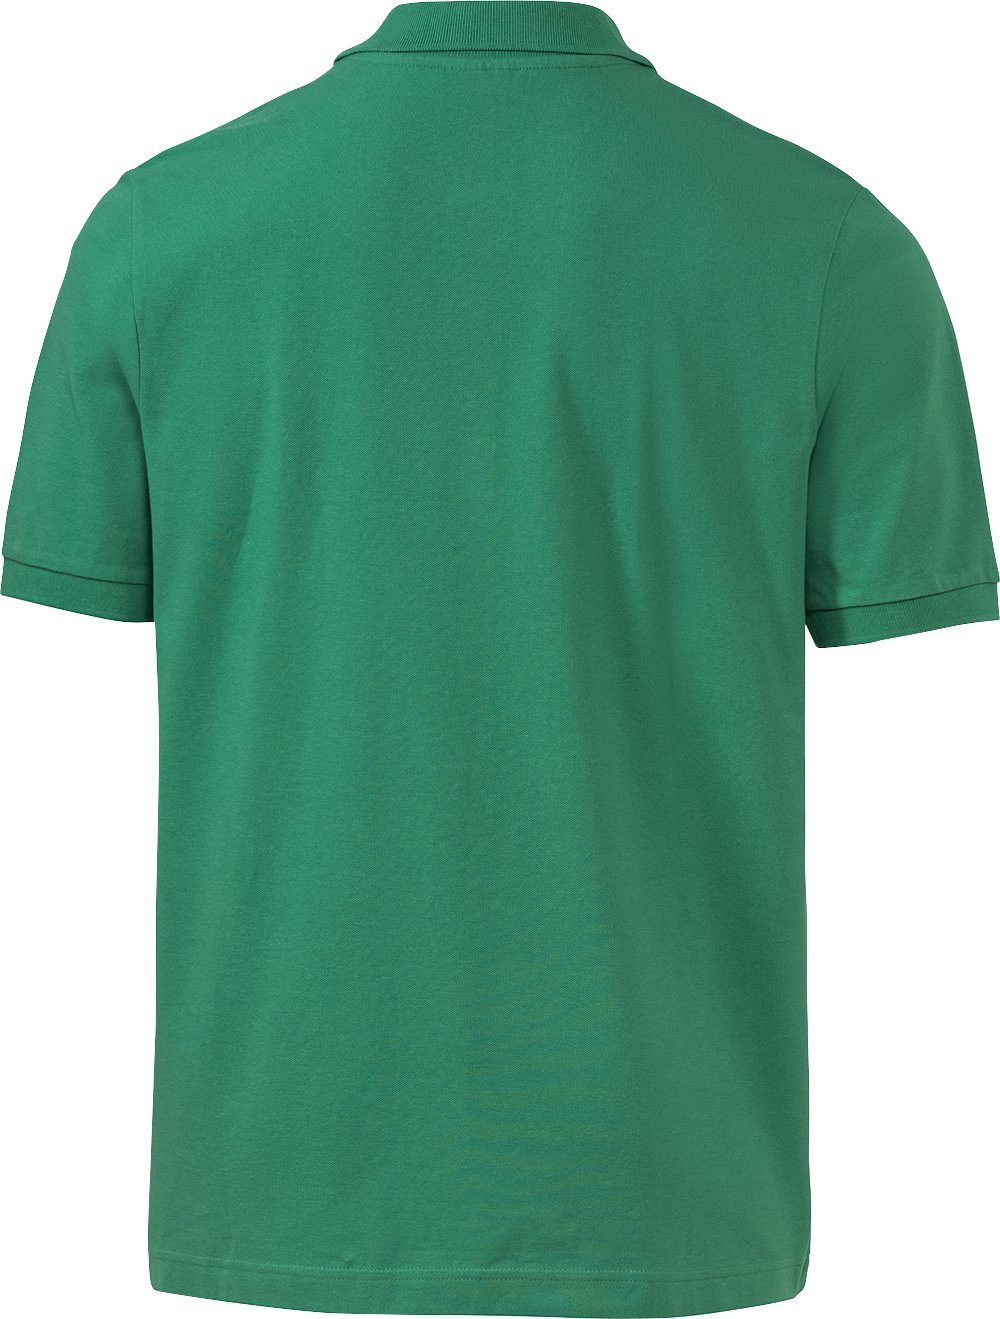 Umbro Poloshirt körniges Piqué-Gewebe Baumwolle grün aus